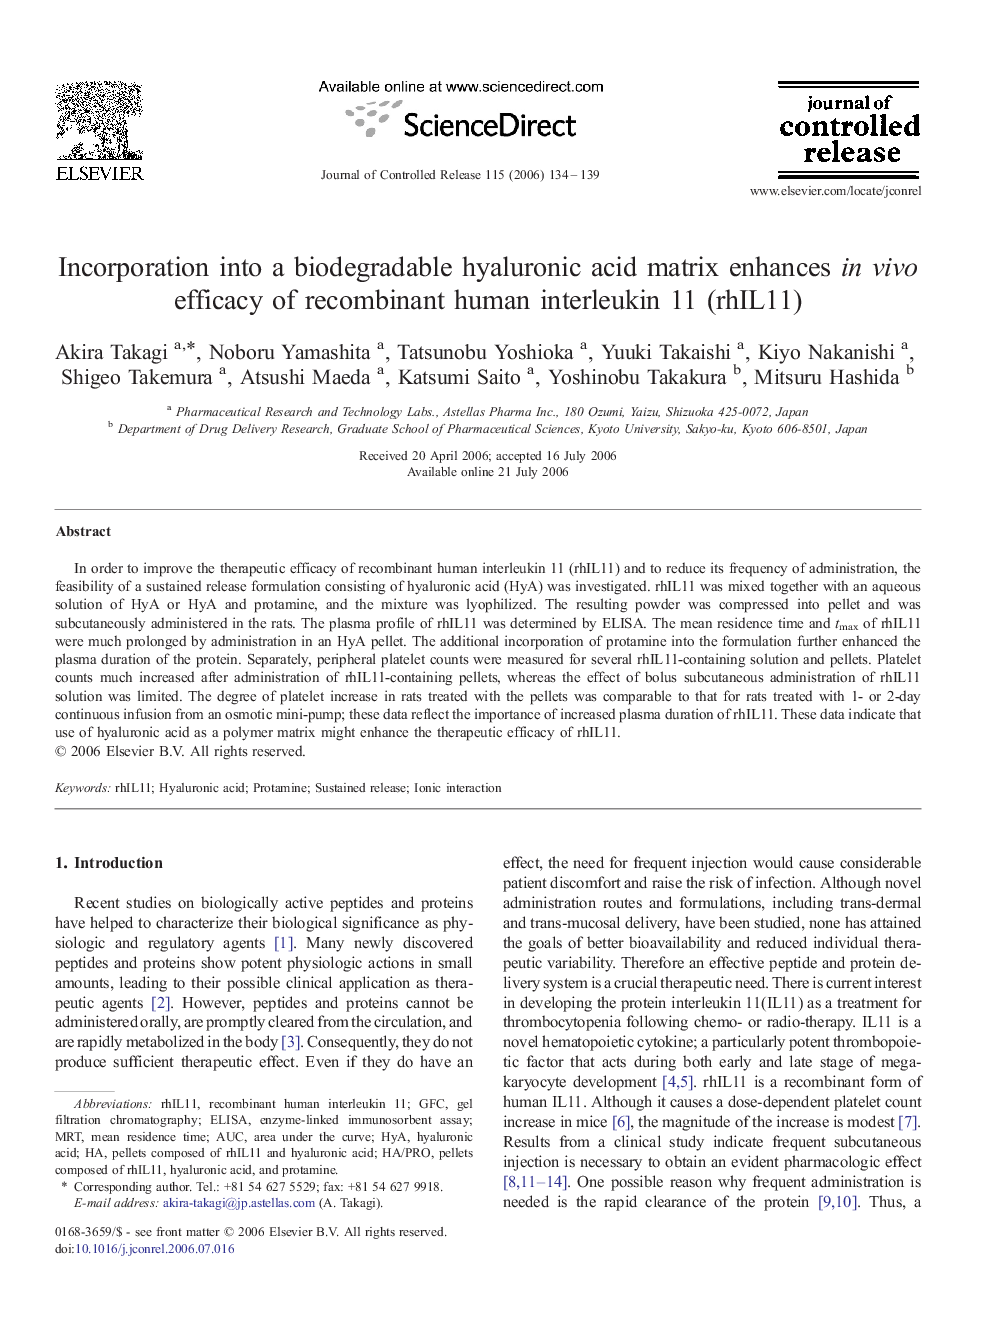 Incorporation into a biodegradable hyaluronic acid matrix enhances in vivo efficacy of recombinant human interleukin 11 (rhIL11)